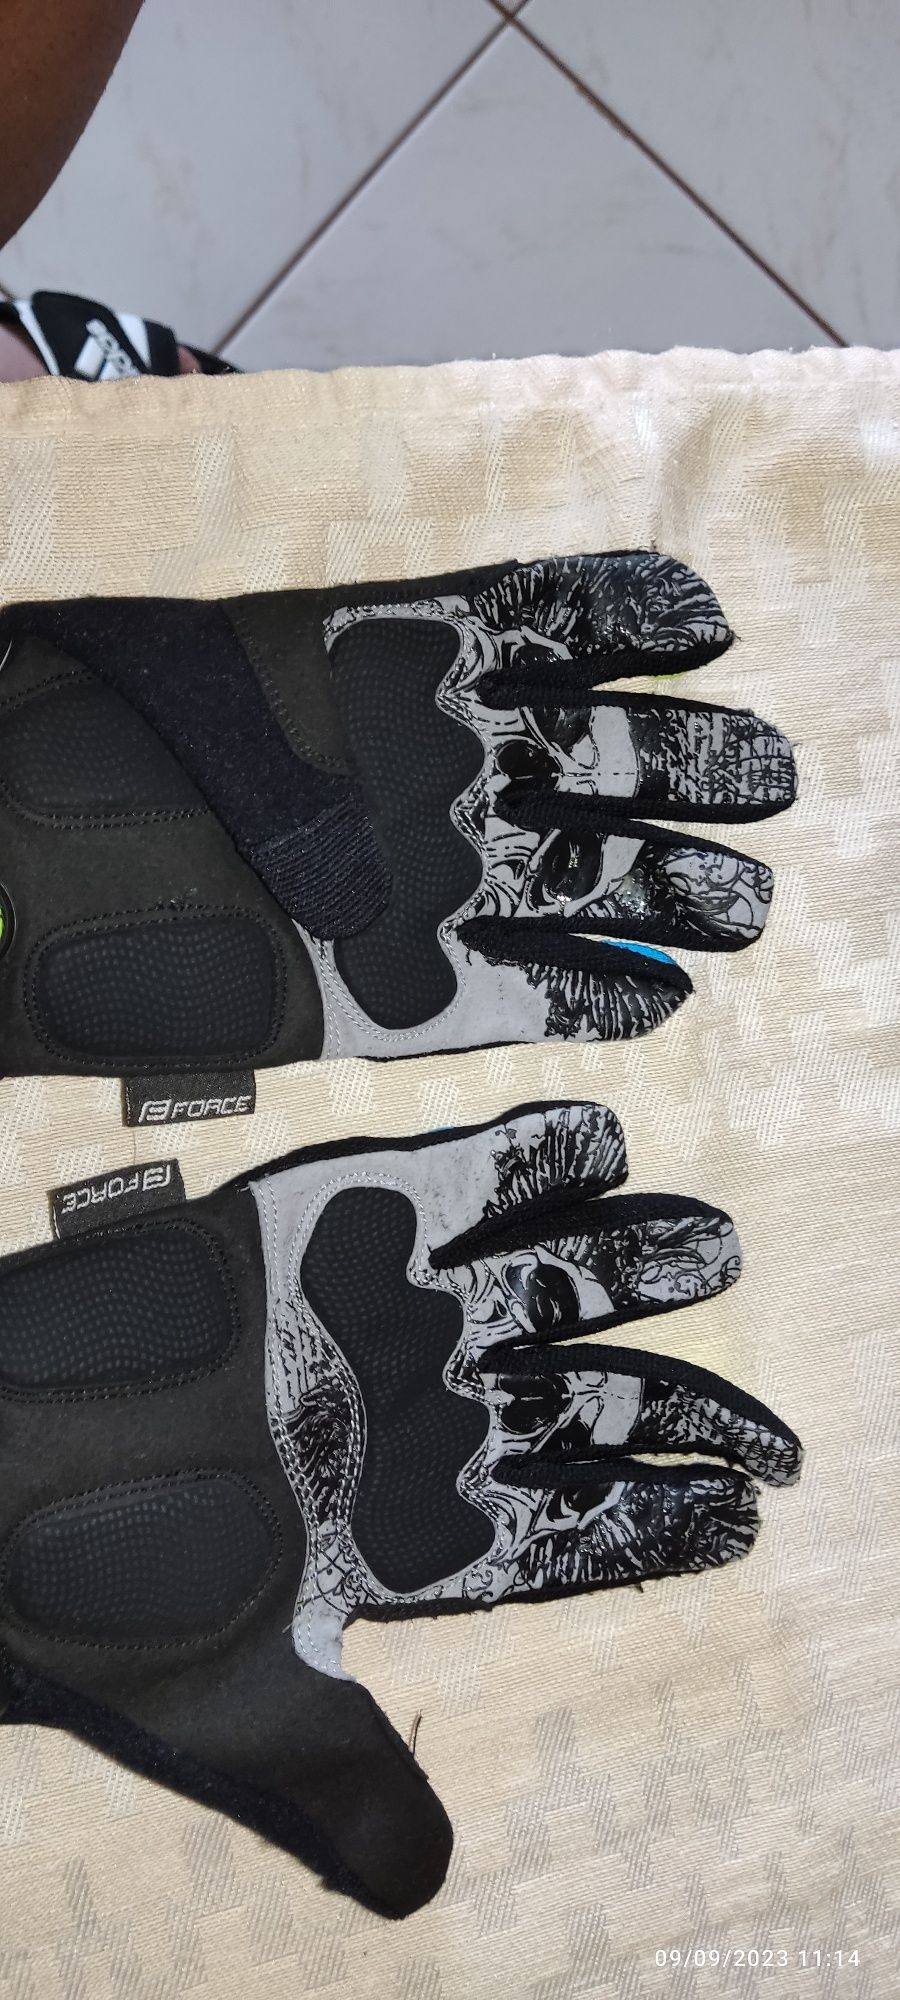 Ръкавици за колело Forse S размер